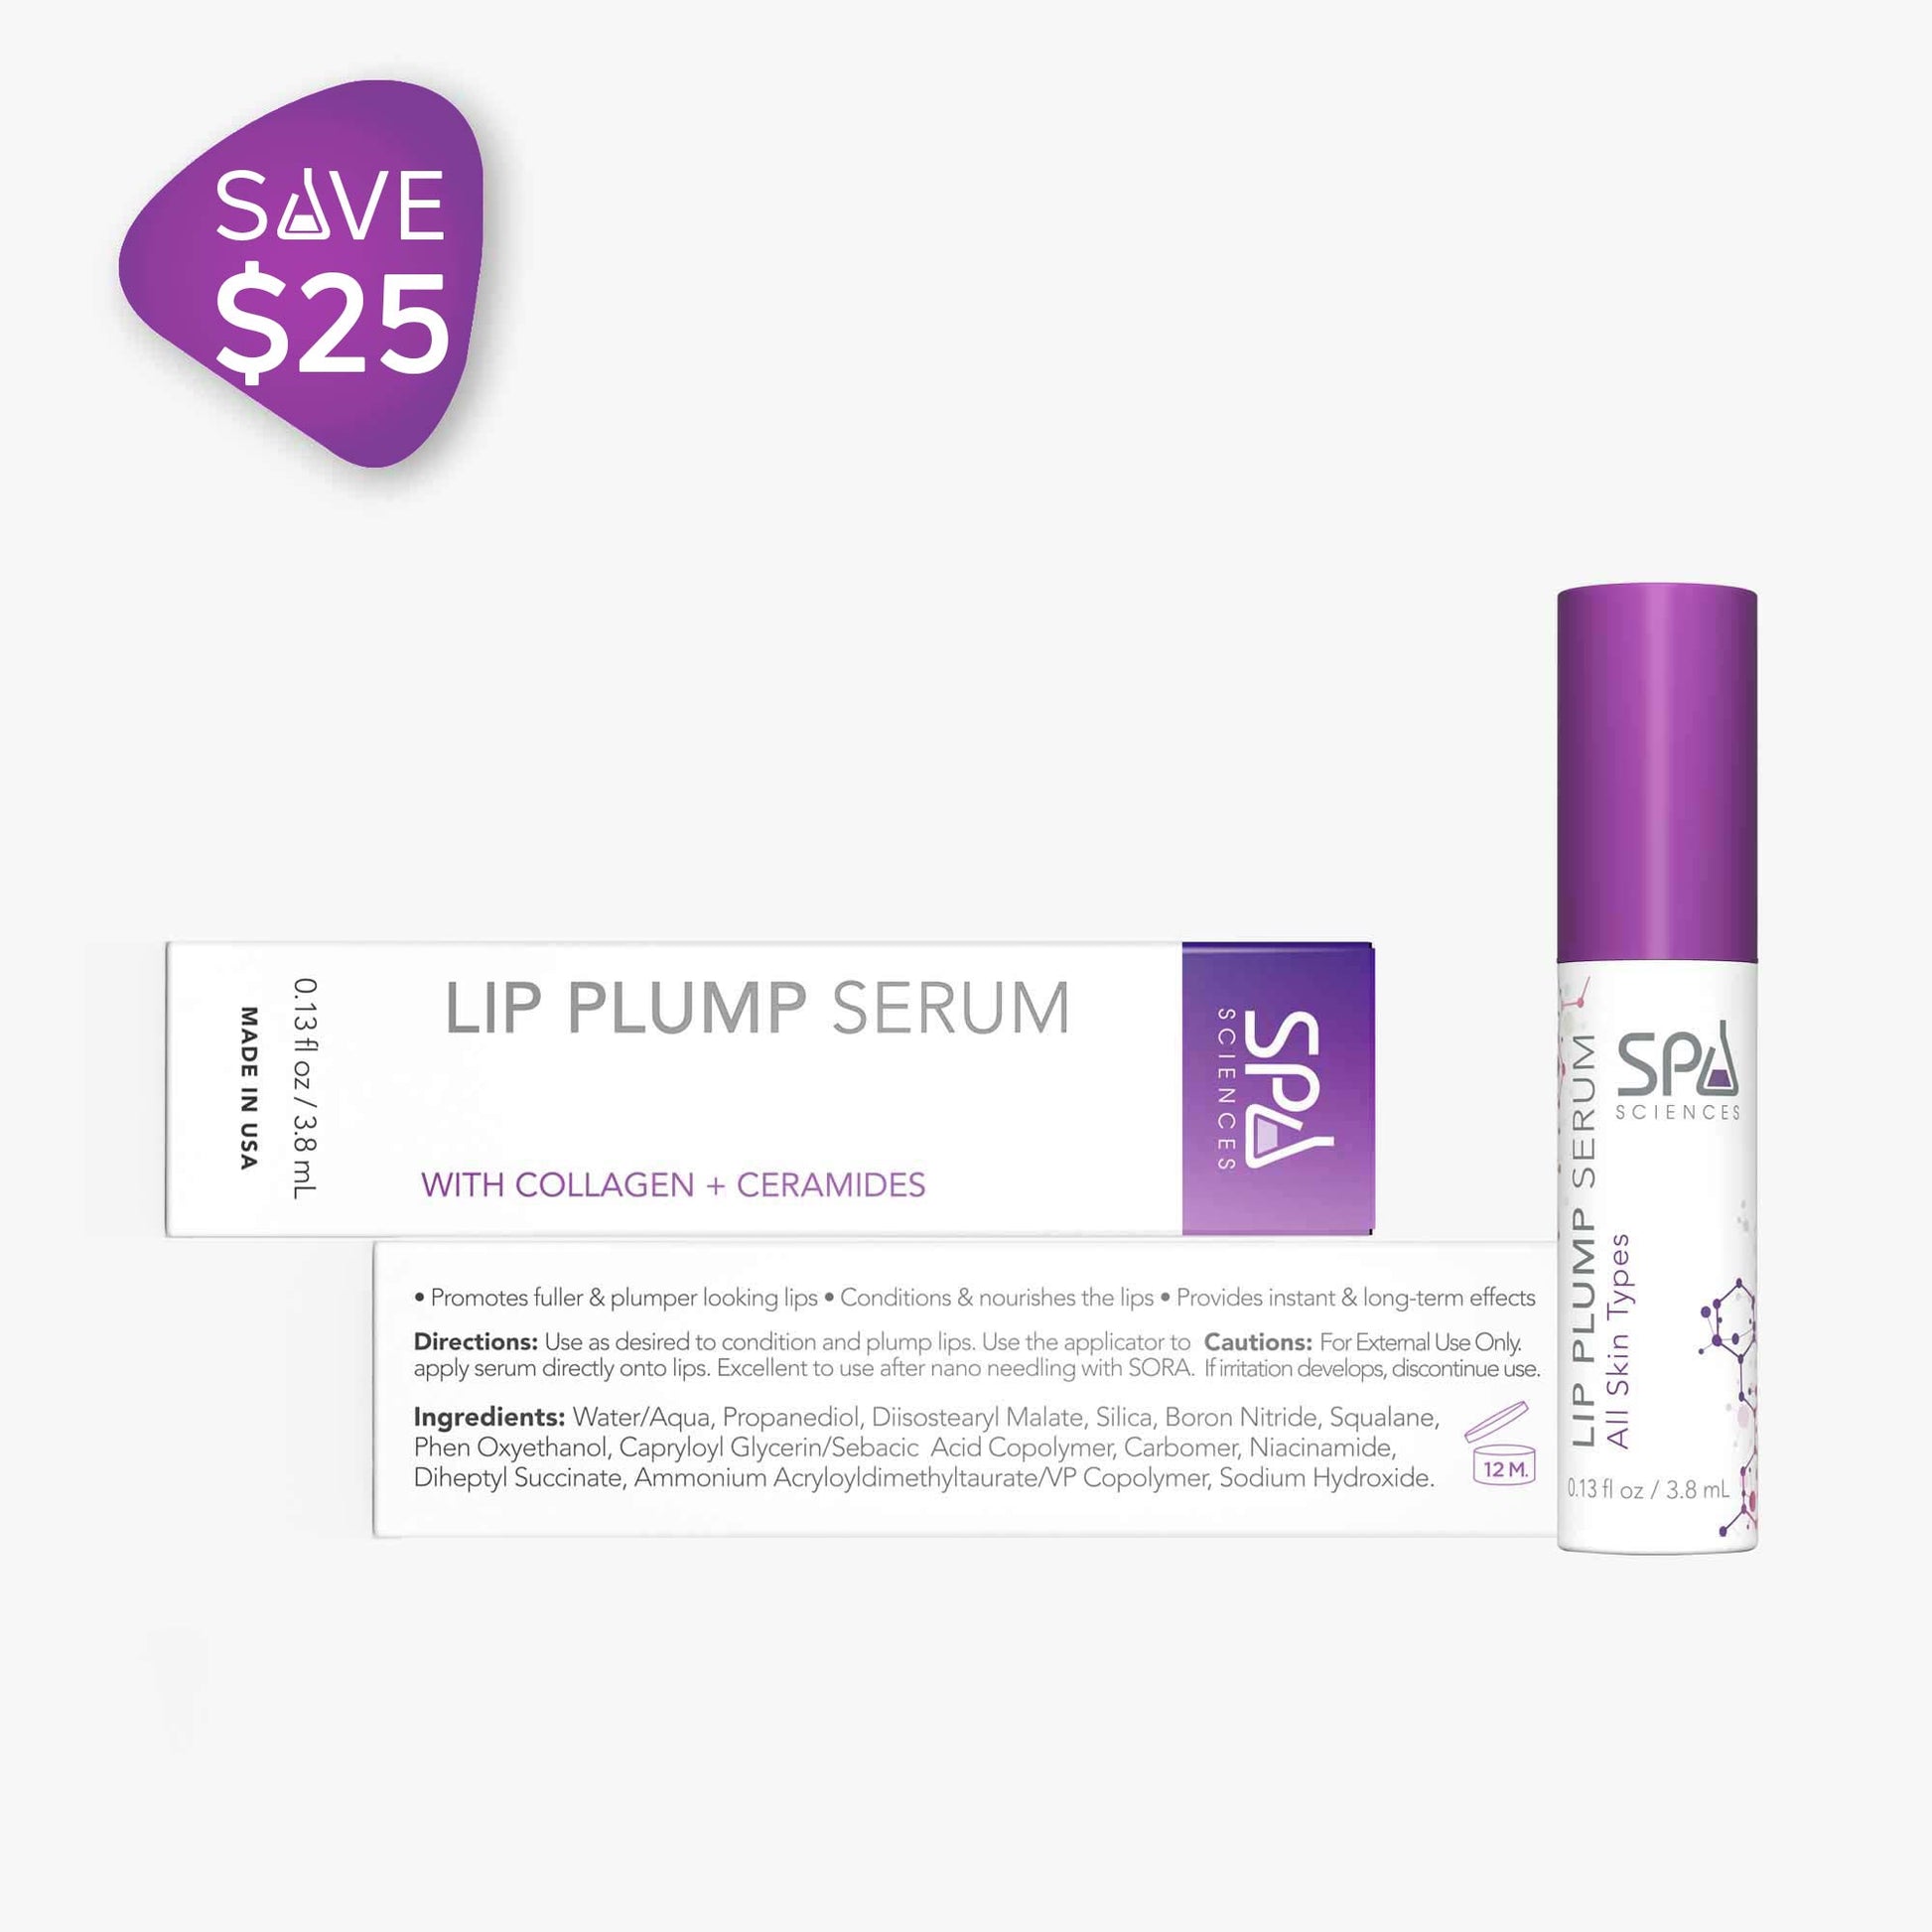 Plump It Lip plump serum by Spa Sciences.